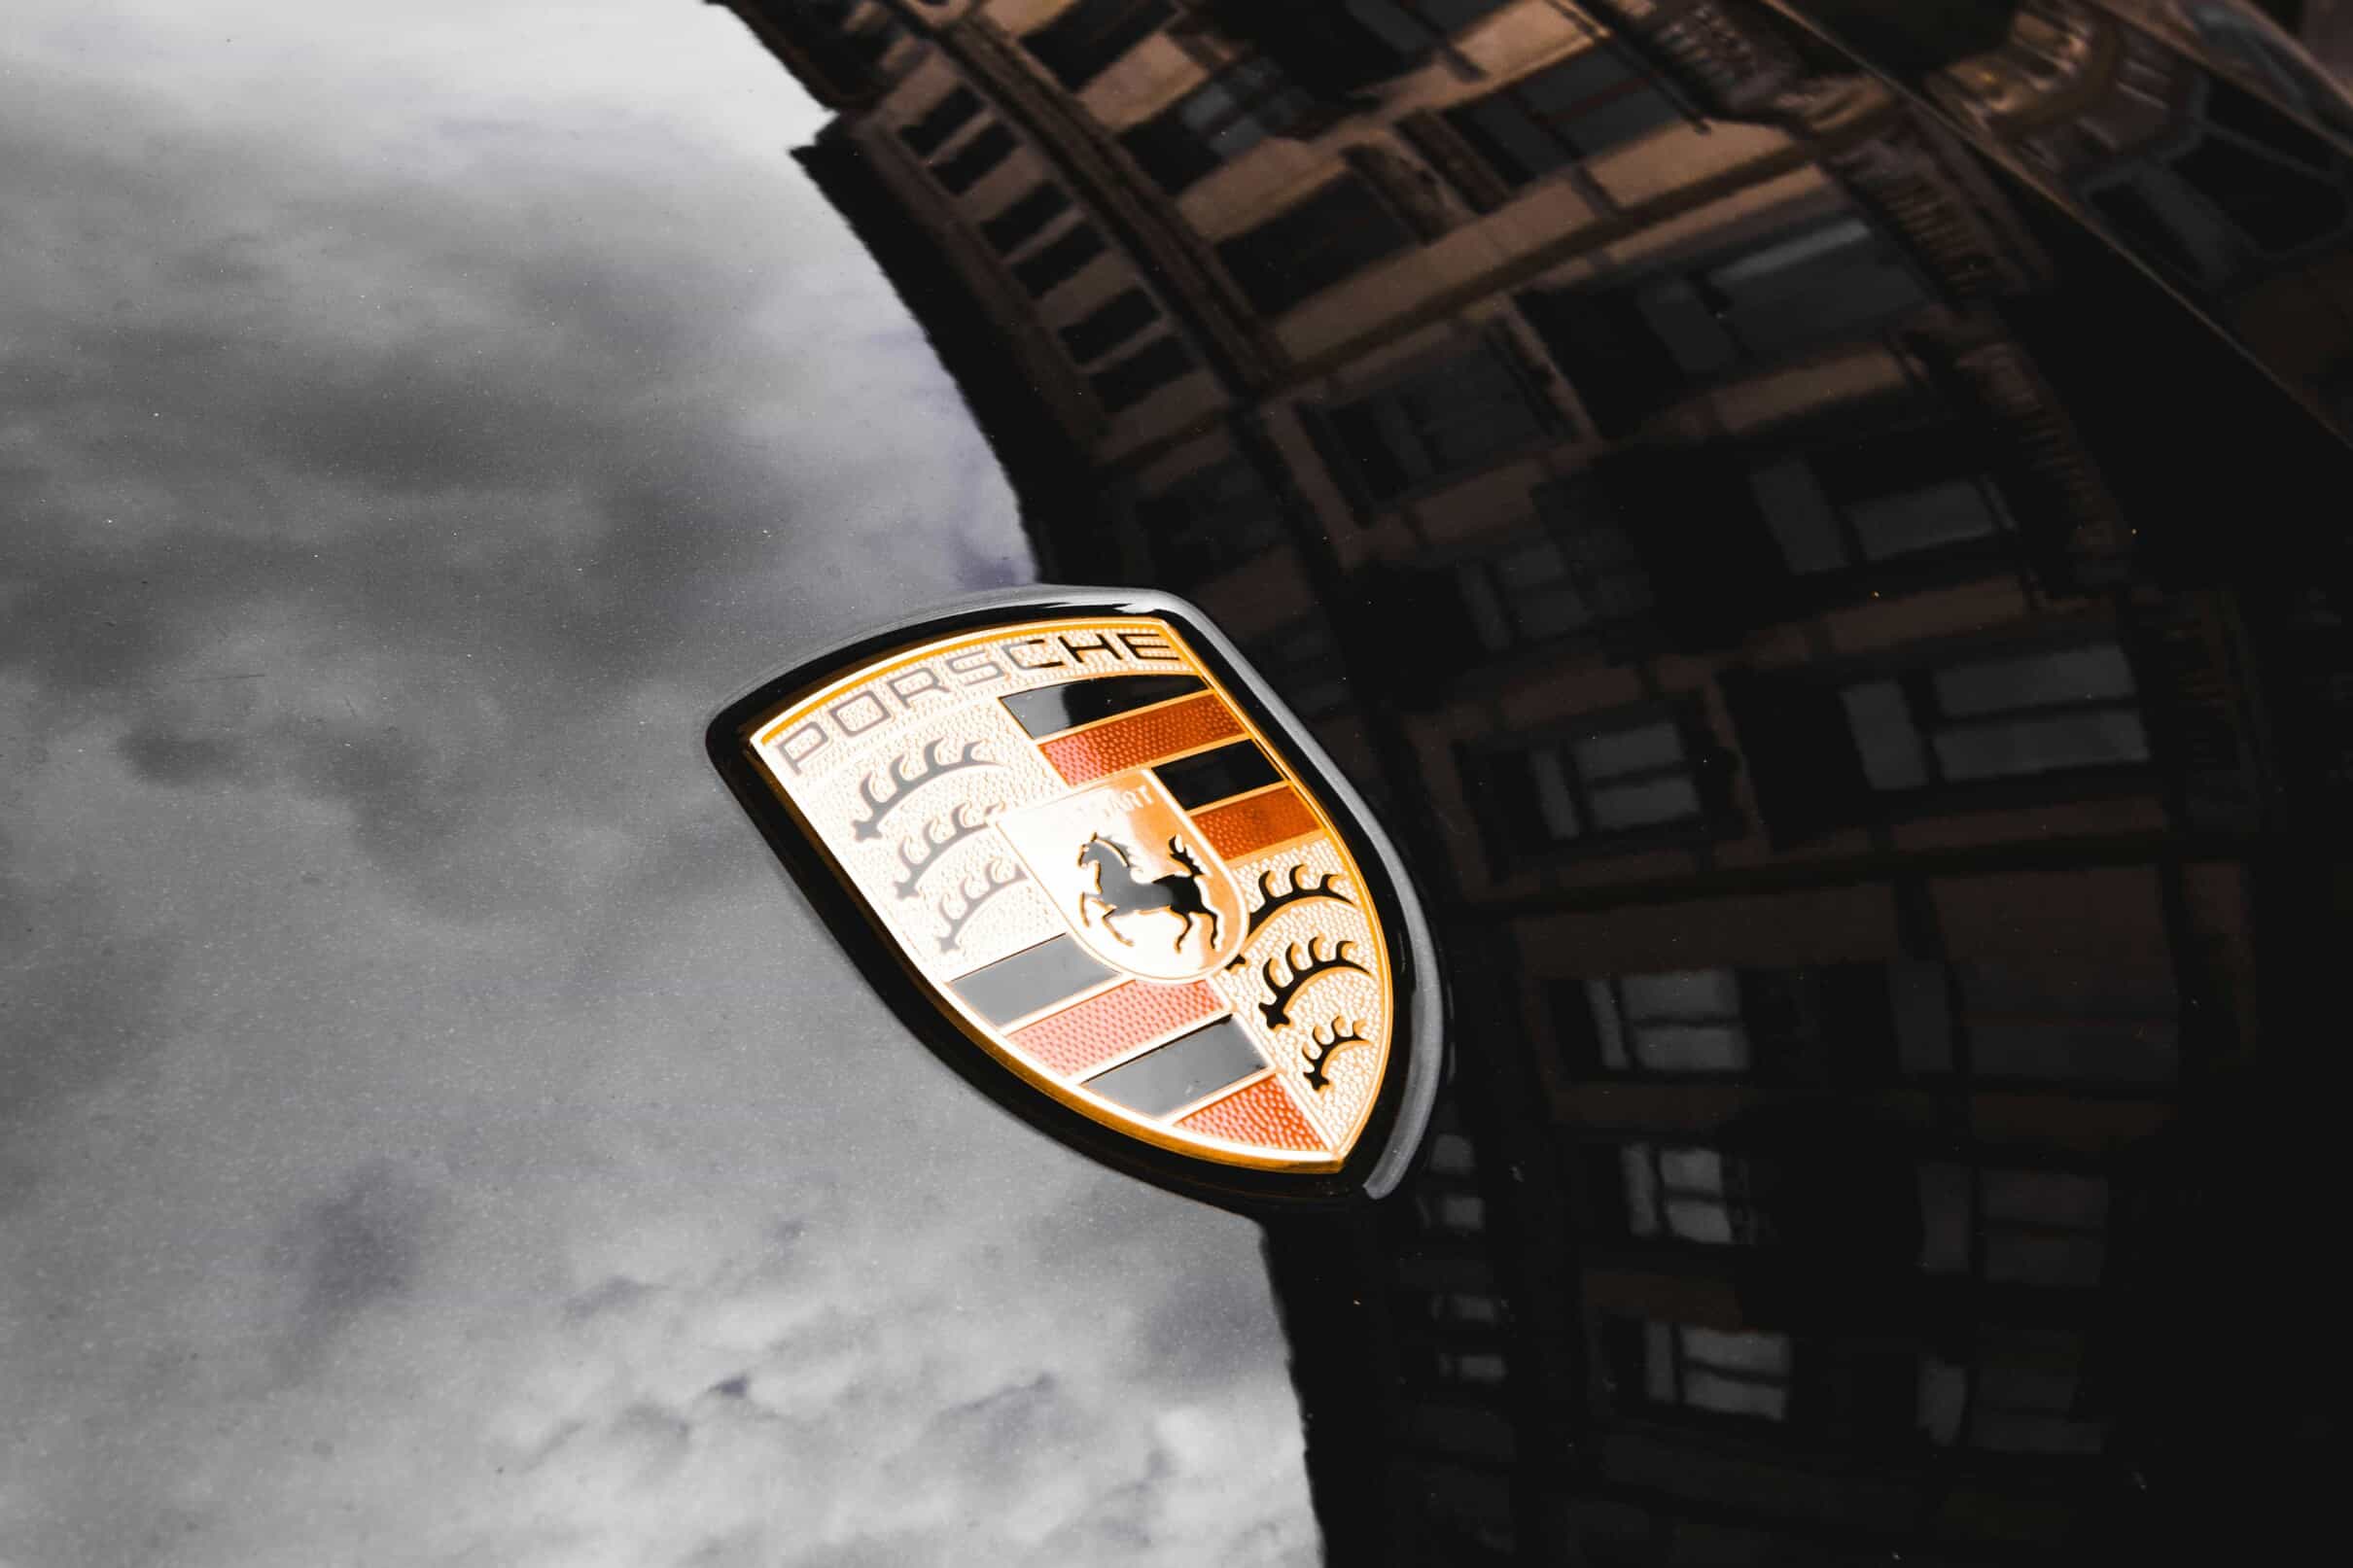 Porsche Badge: Iconic Crest Signifying Automotive Legacy